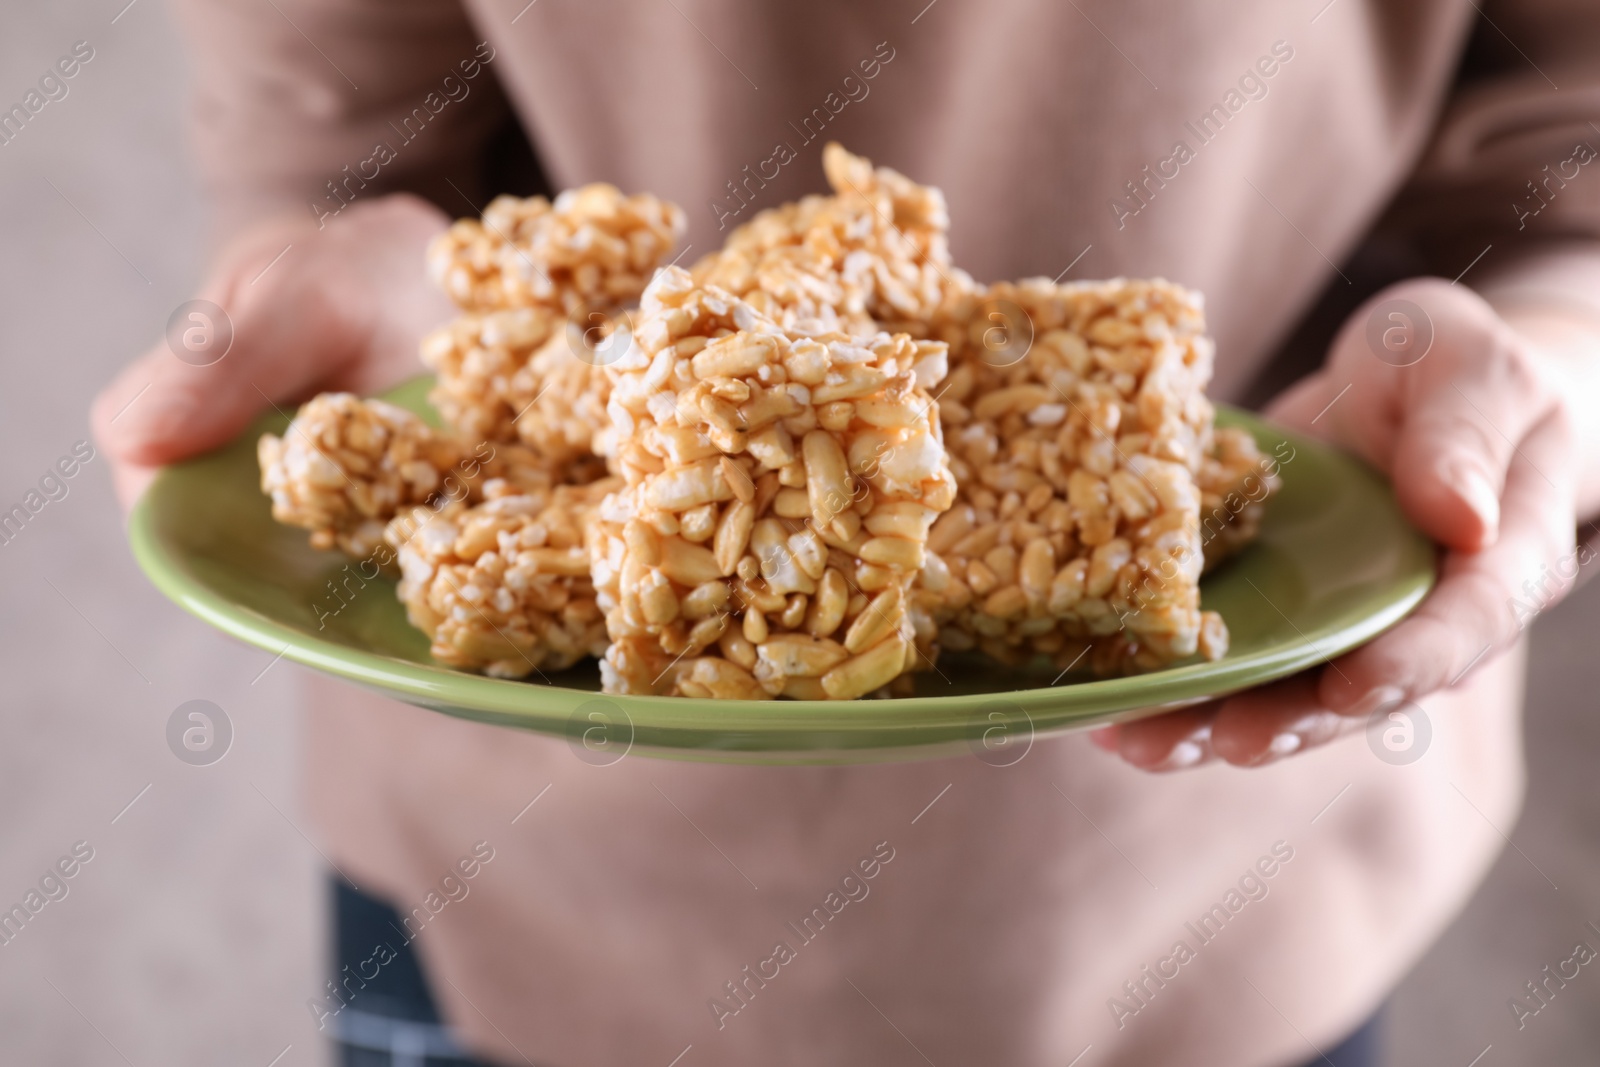 Photo of Woman holding plate with puffed rice pieces (kozinaki), closeup